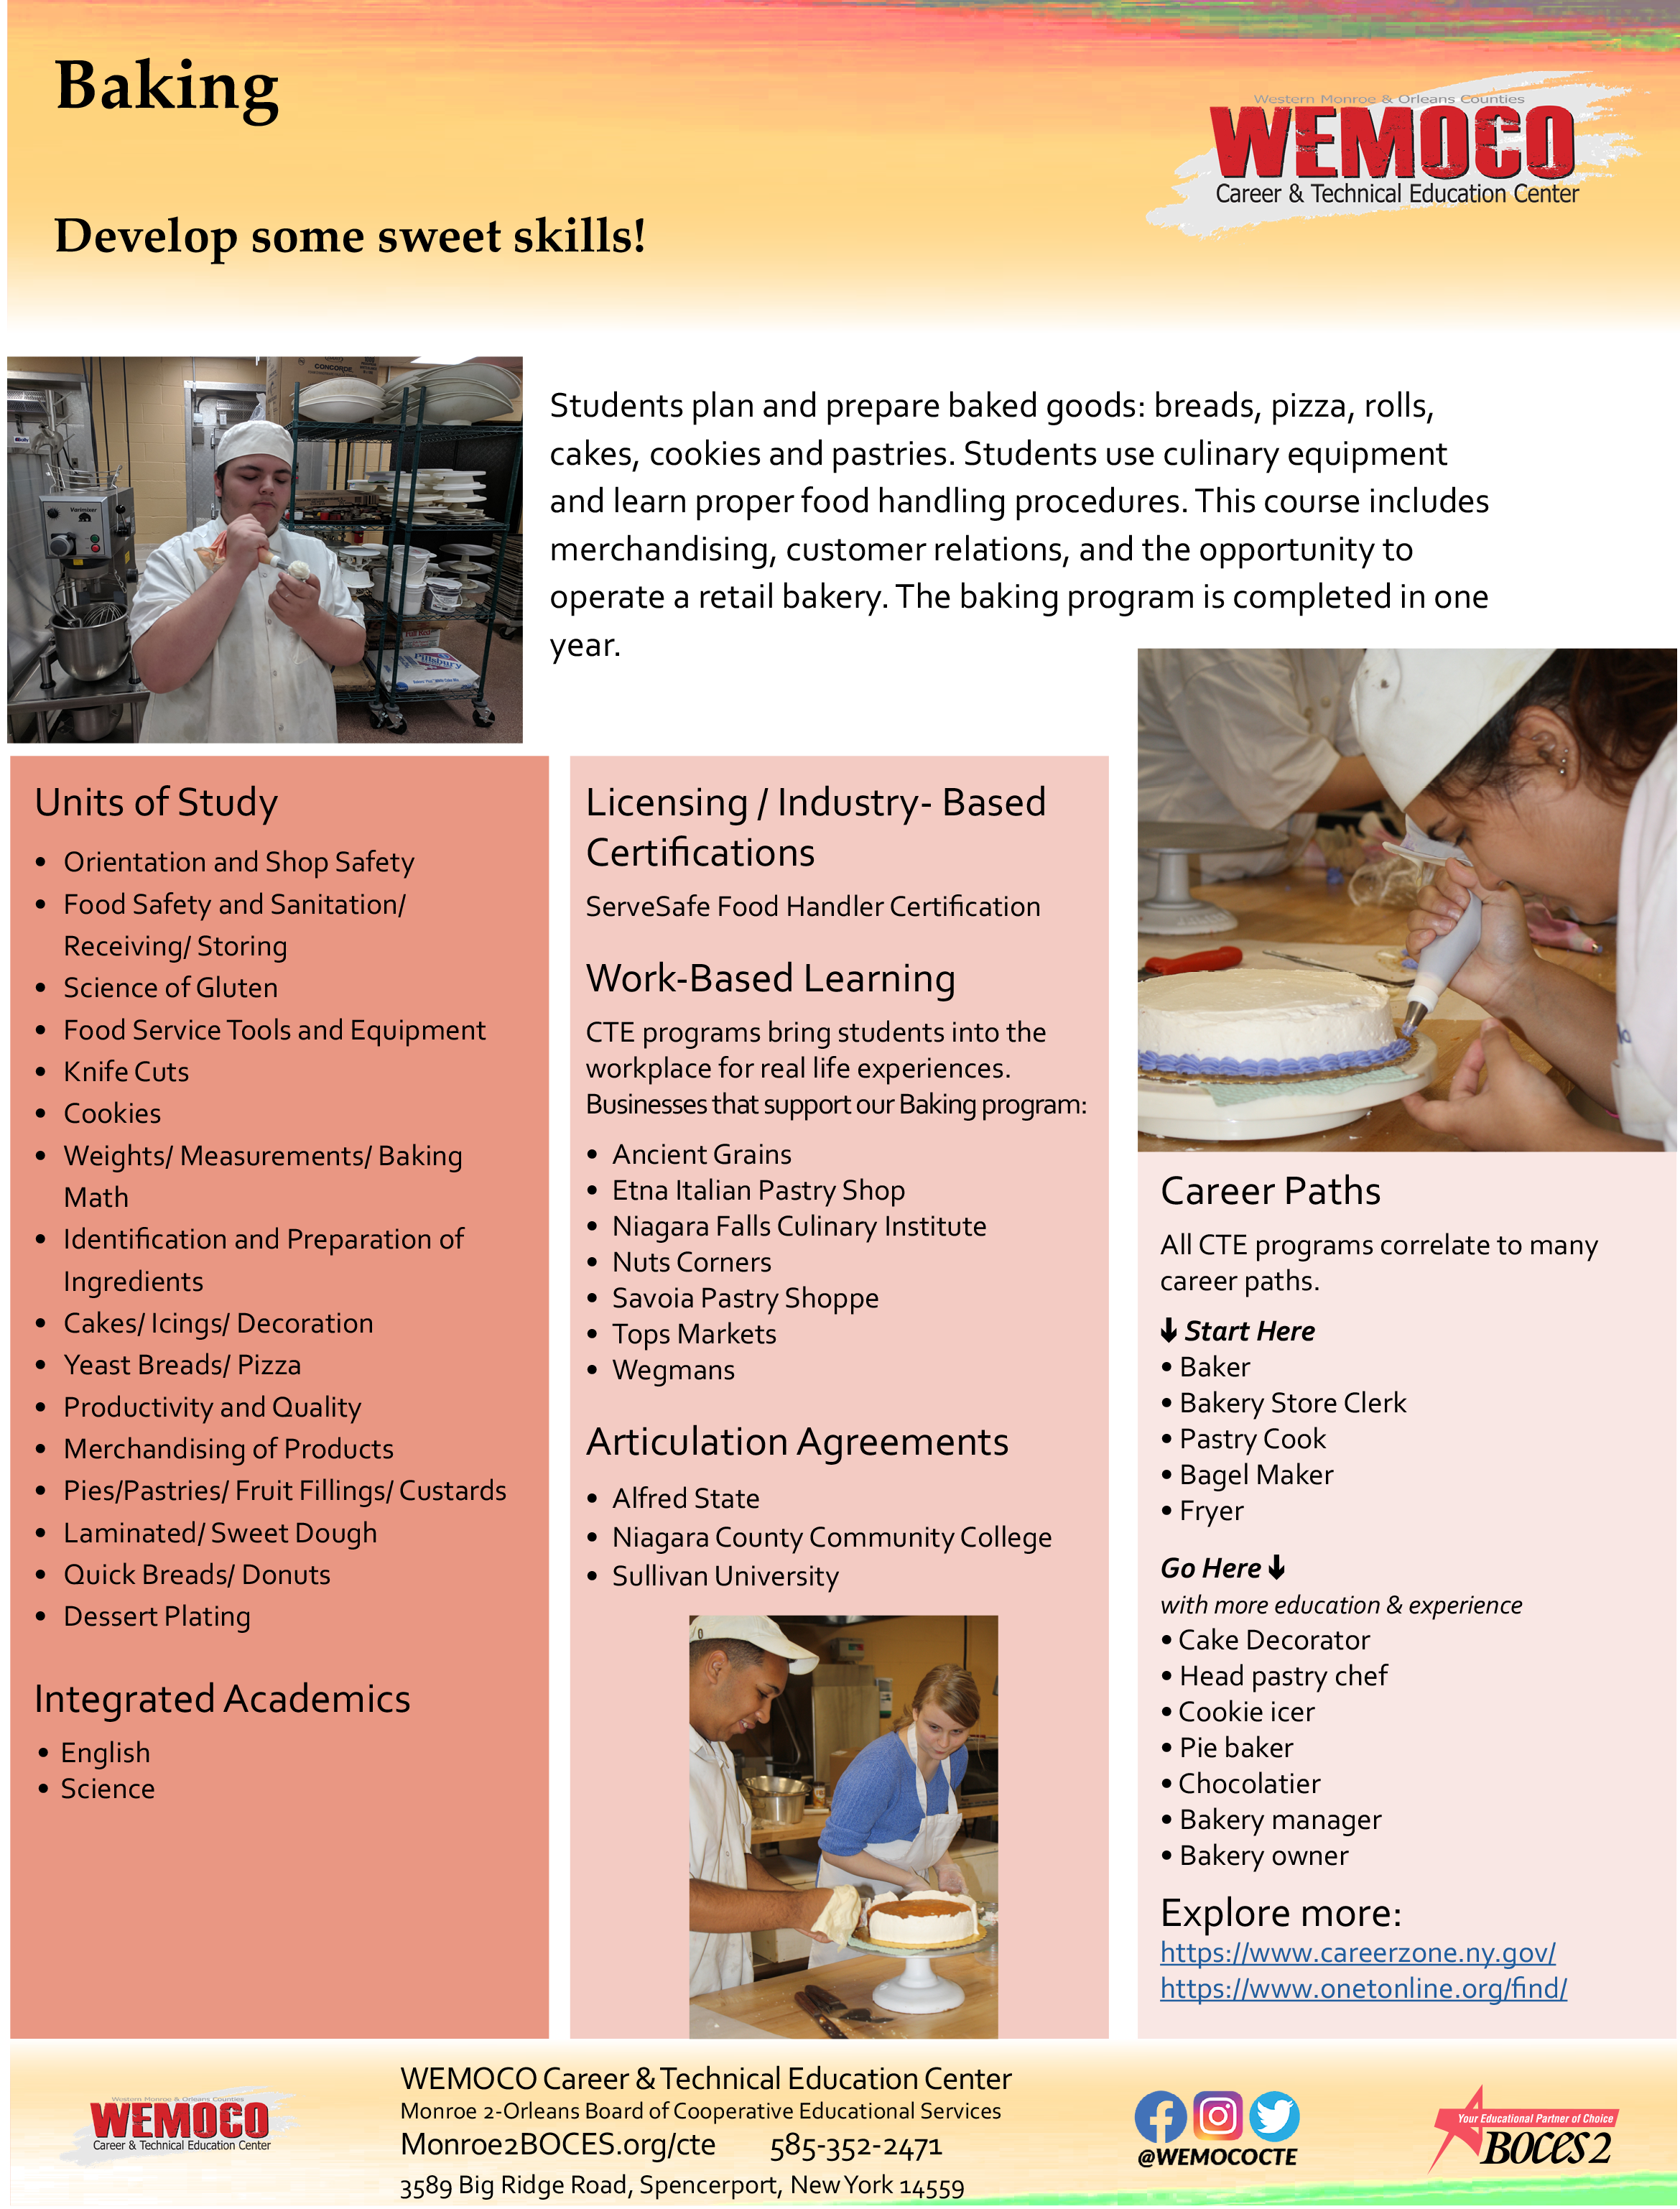 Baking Program Information